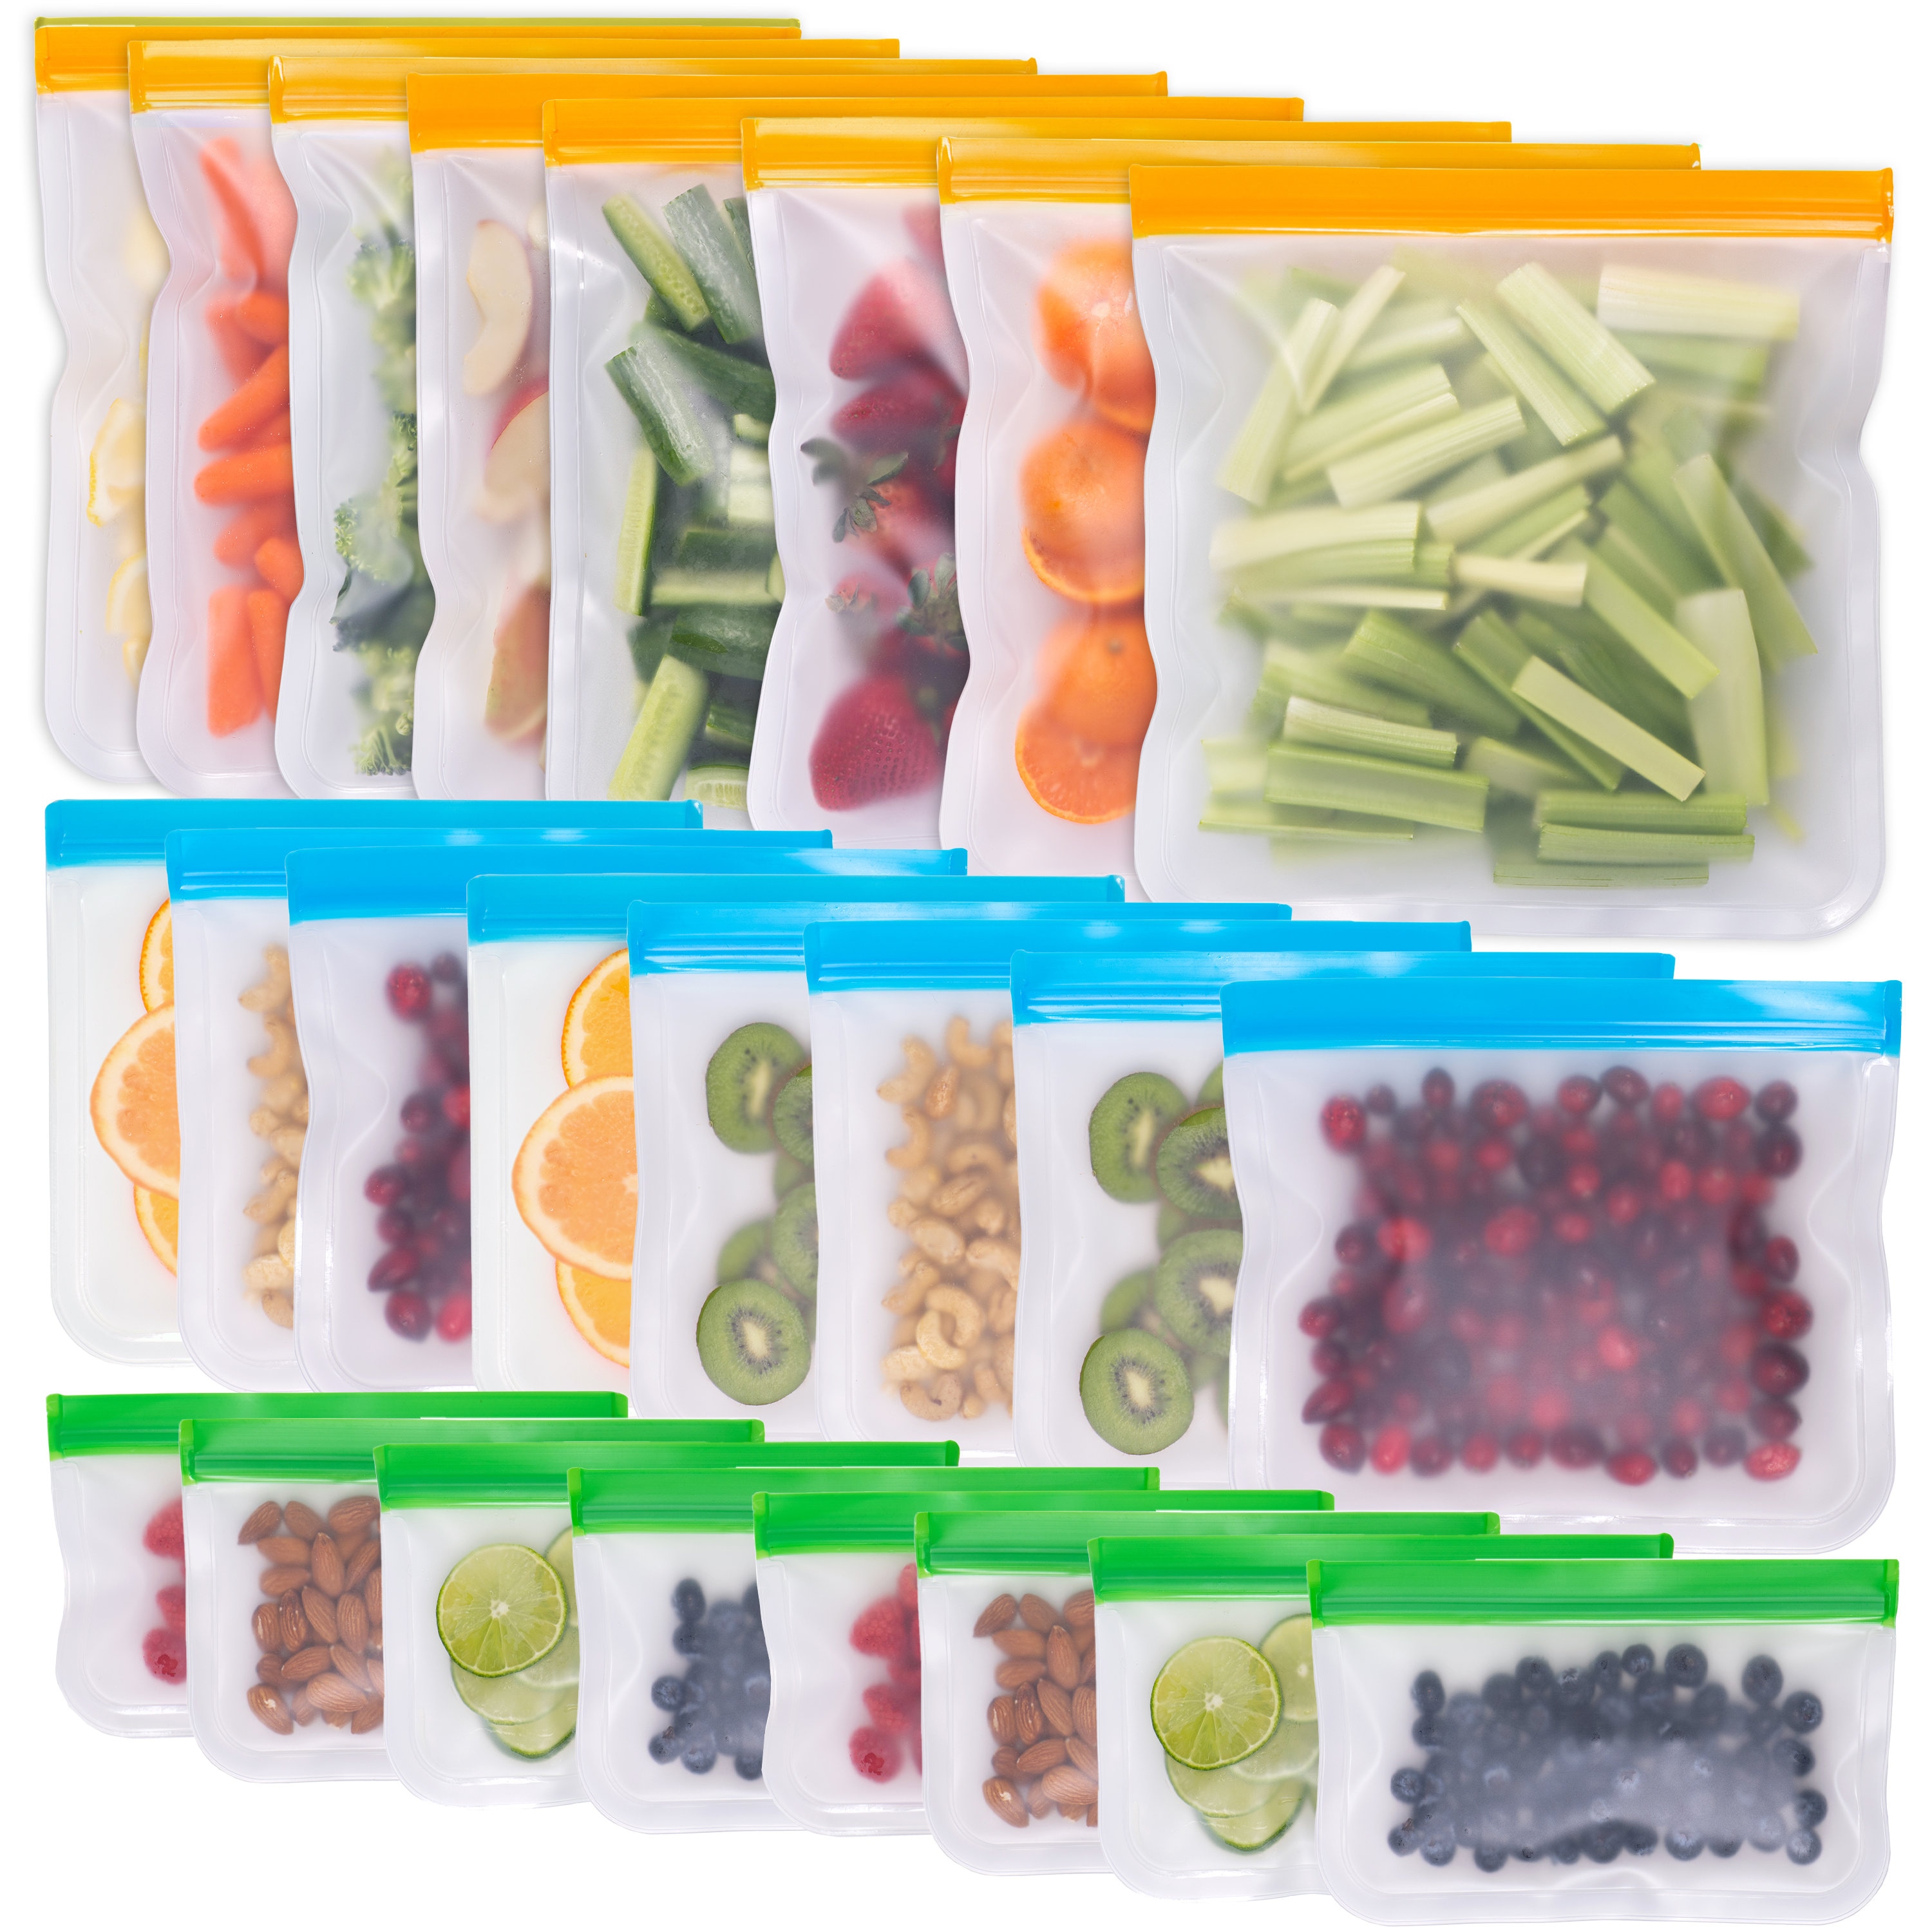 Reusable Gallon Freezer Bags - 6 Pack Large Size Food Storage Bags